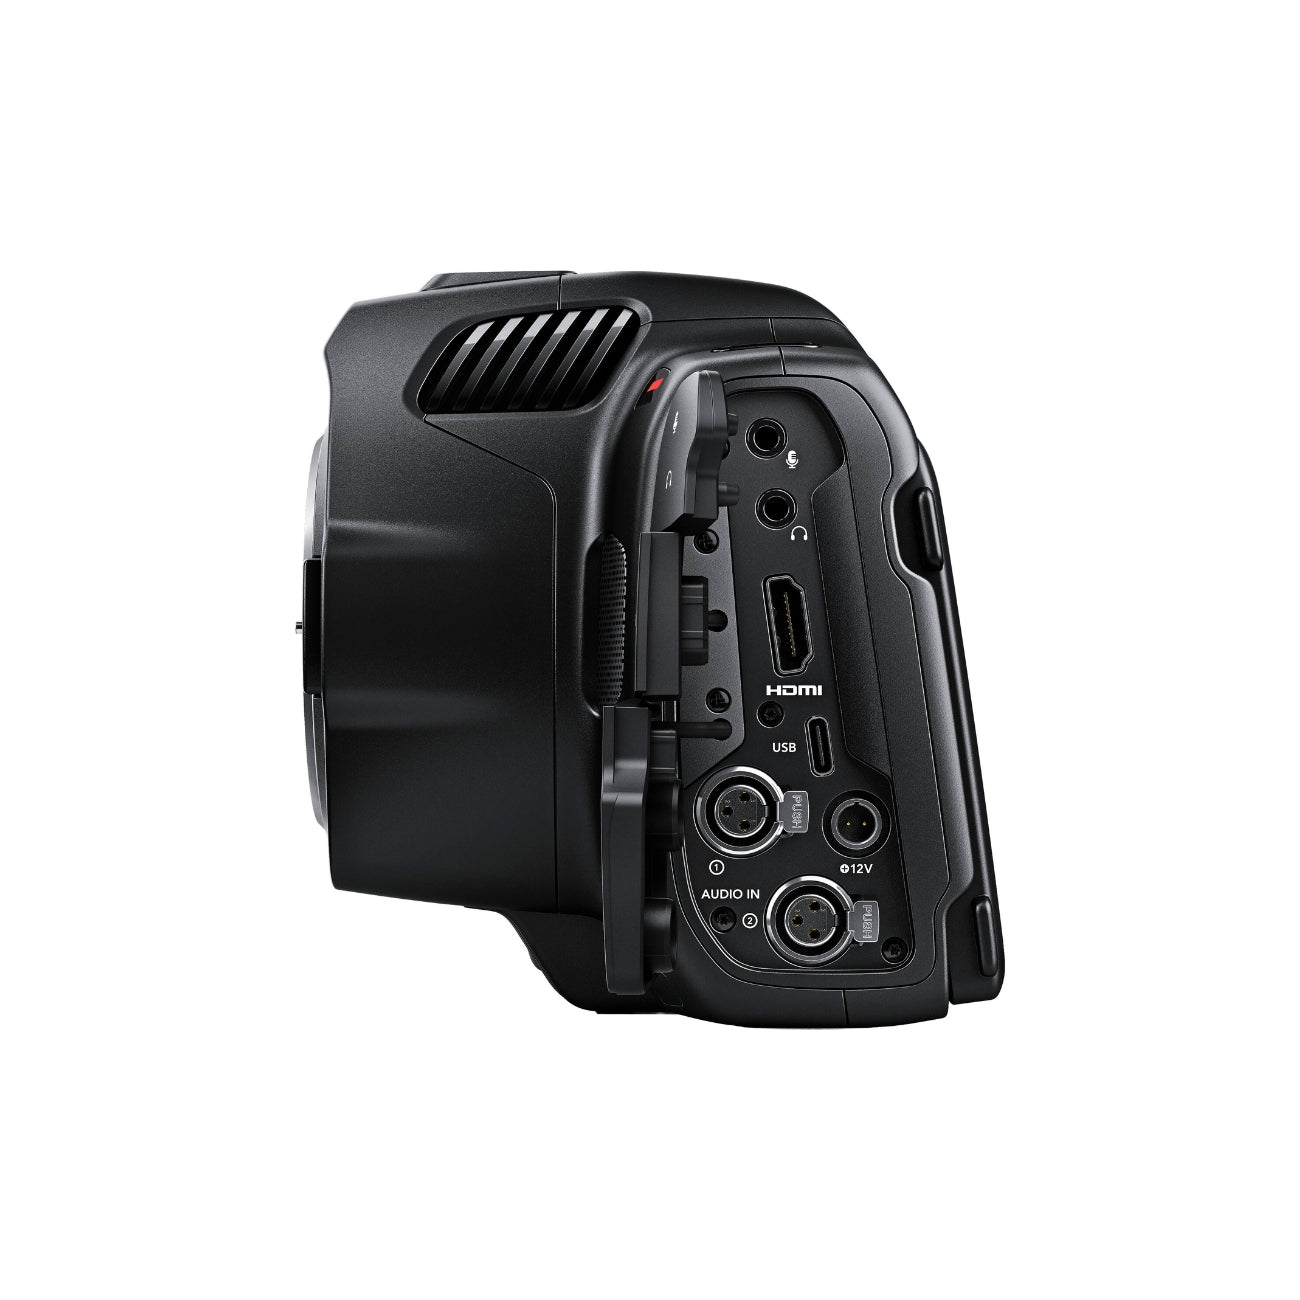 Blackmagic Design Pocket Cinema Camera 6K Pro with DaVinci Resolve Studio - Ports